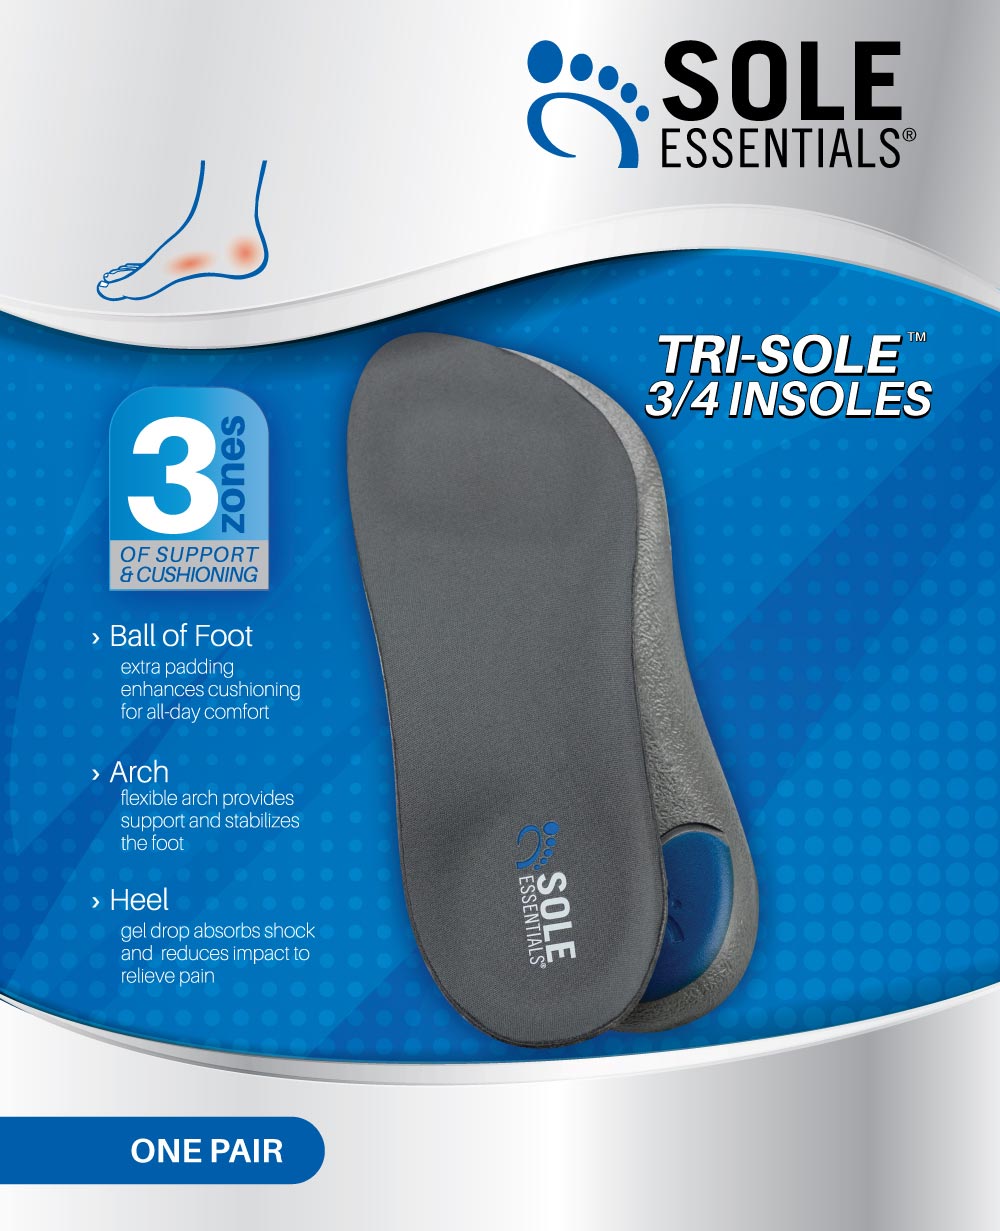 Sole Essentials Tri-Sole Insoles